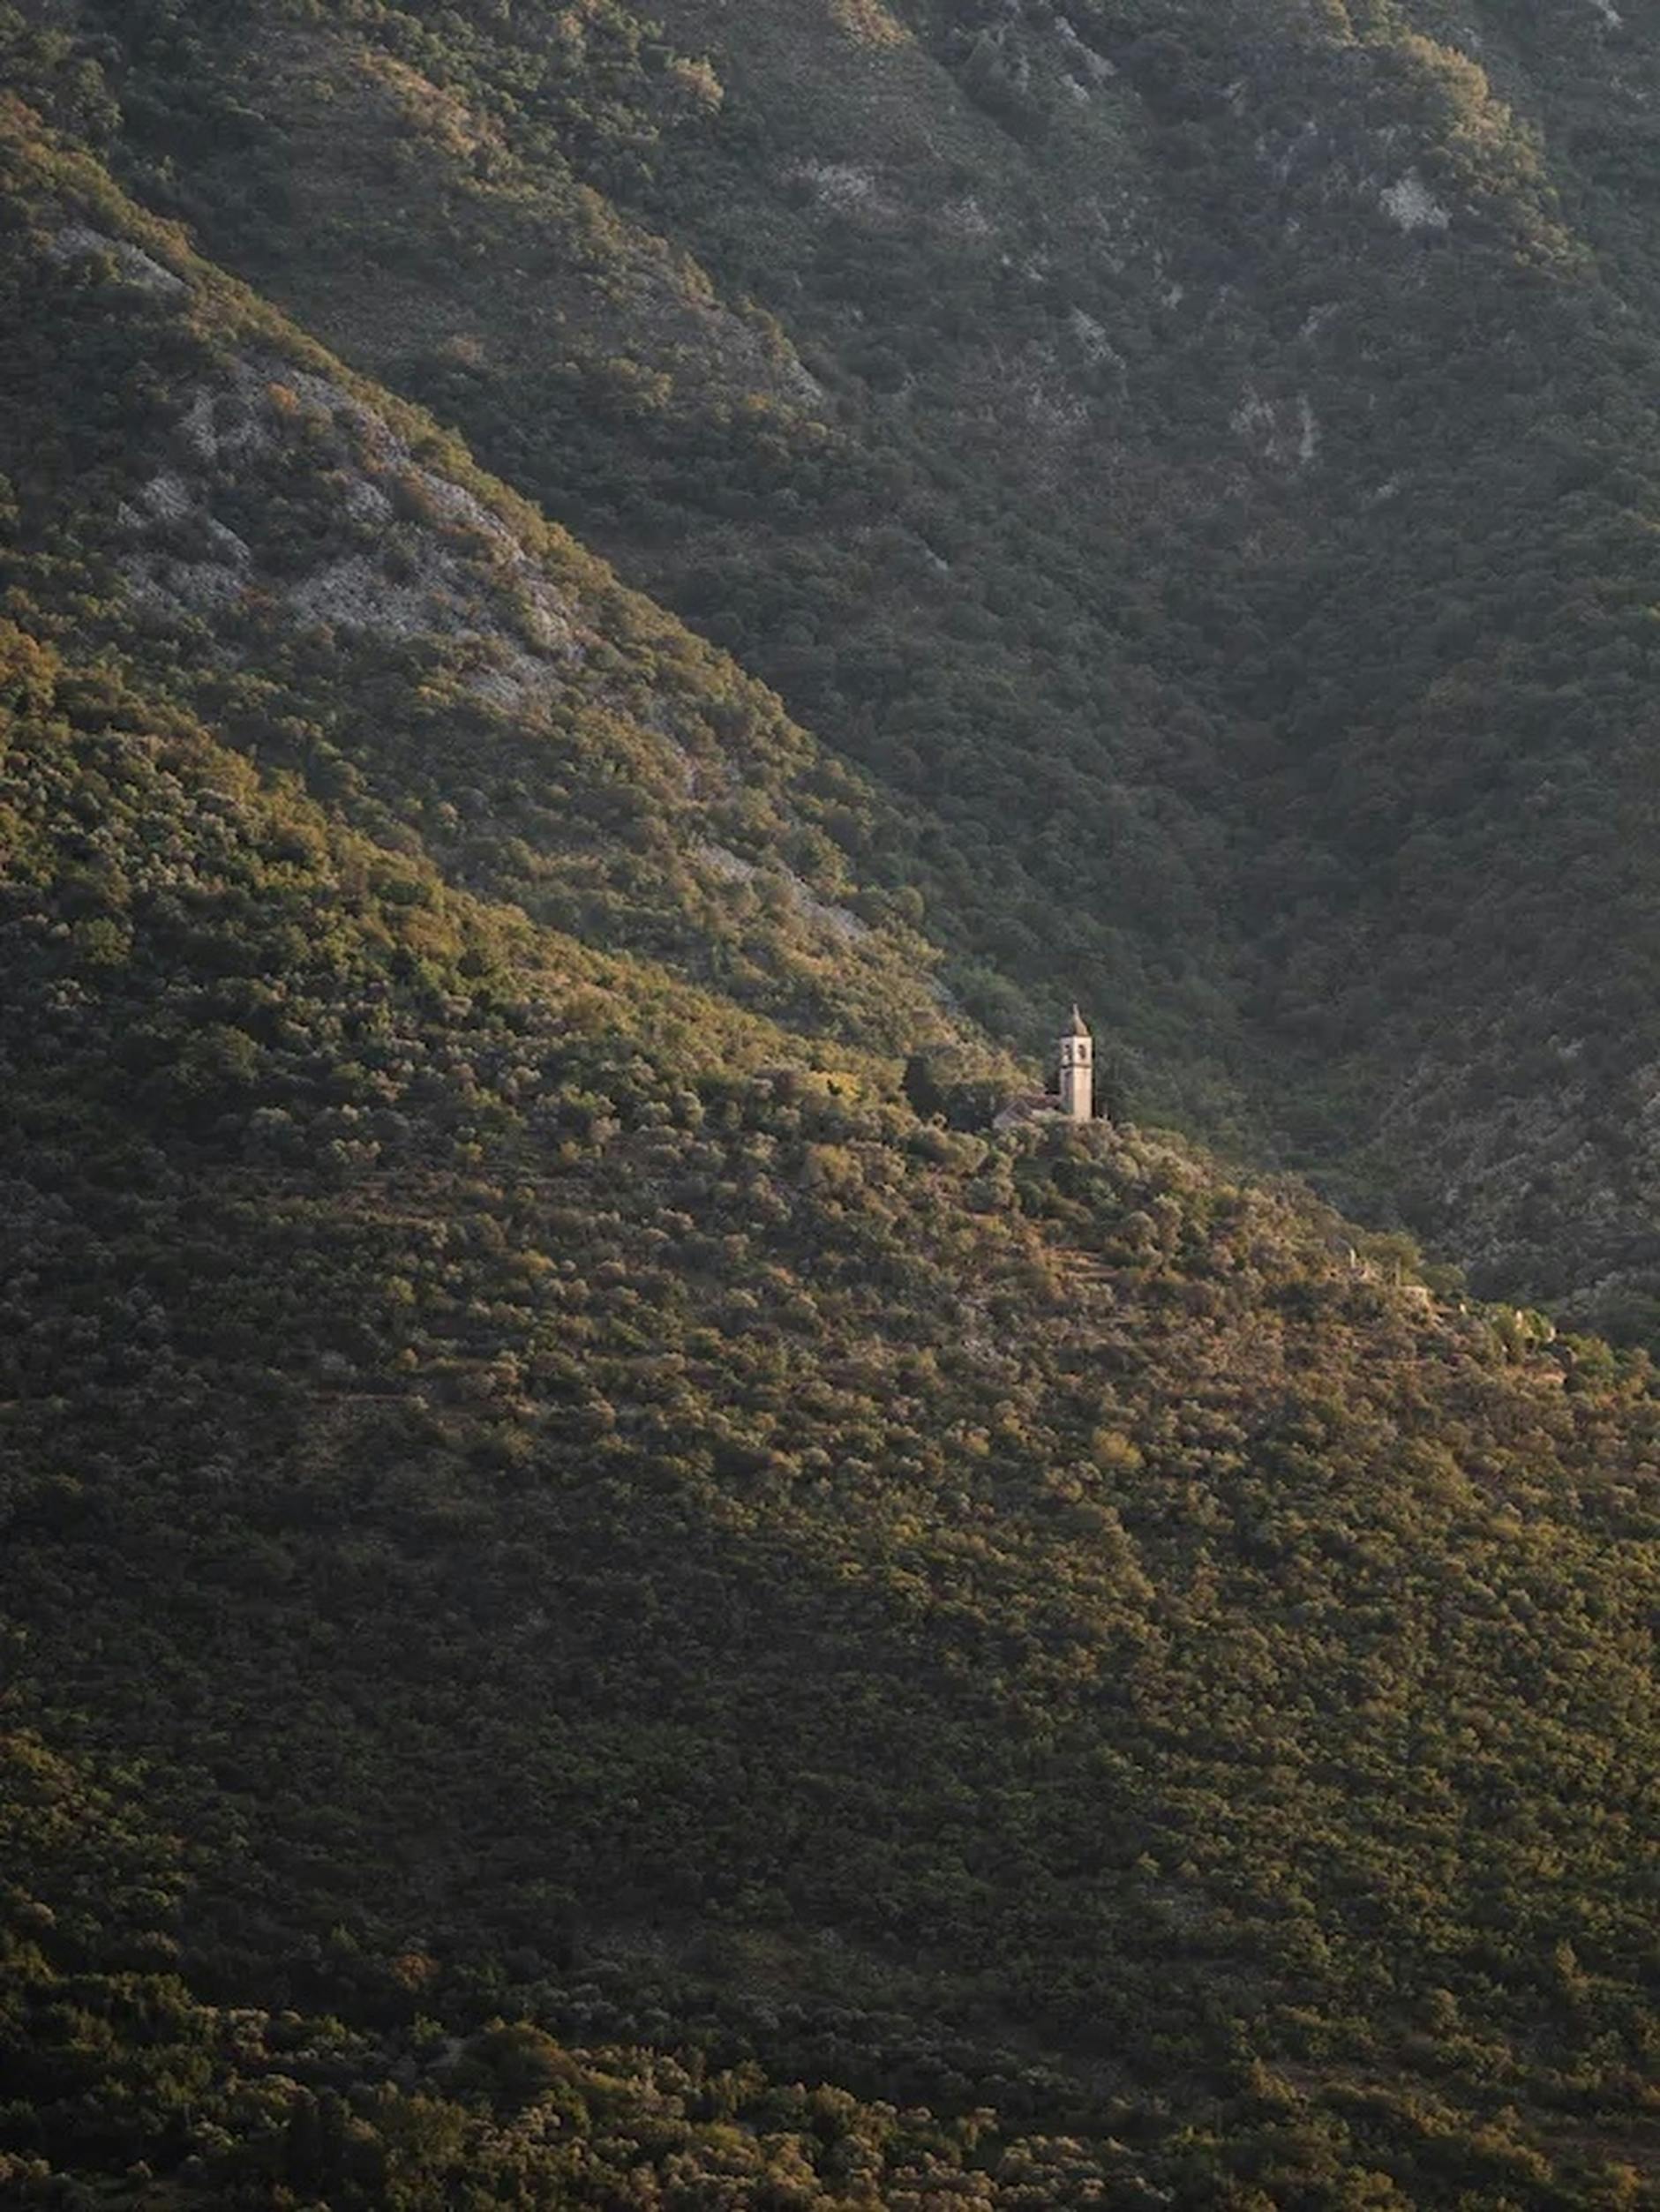 Kotor, Montenegro. Image by Oskar Hagberg on Unsplash.